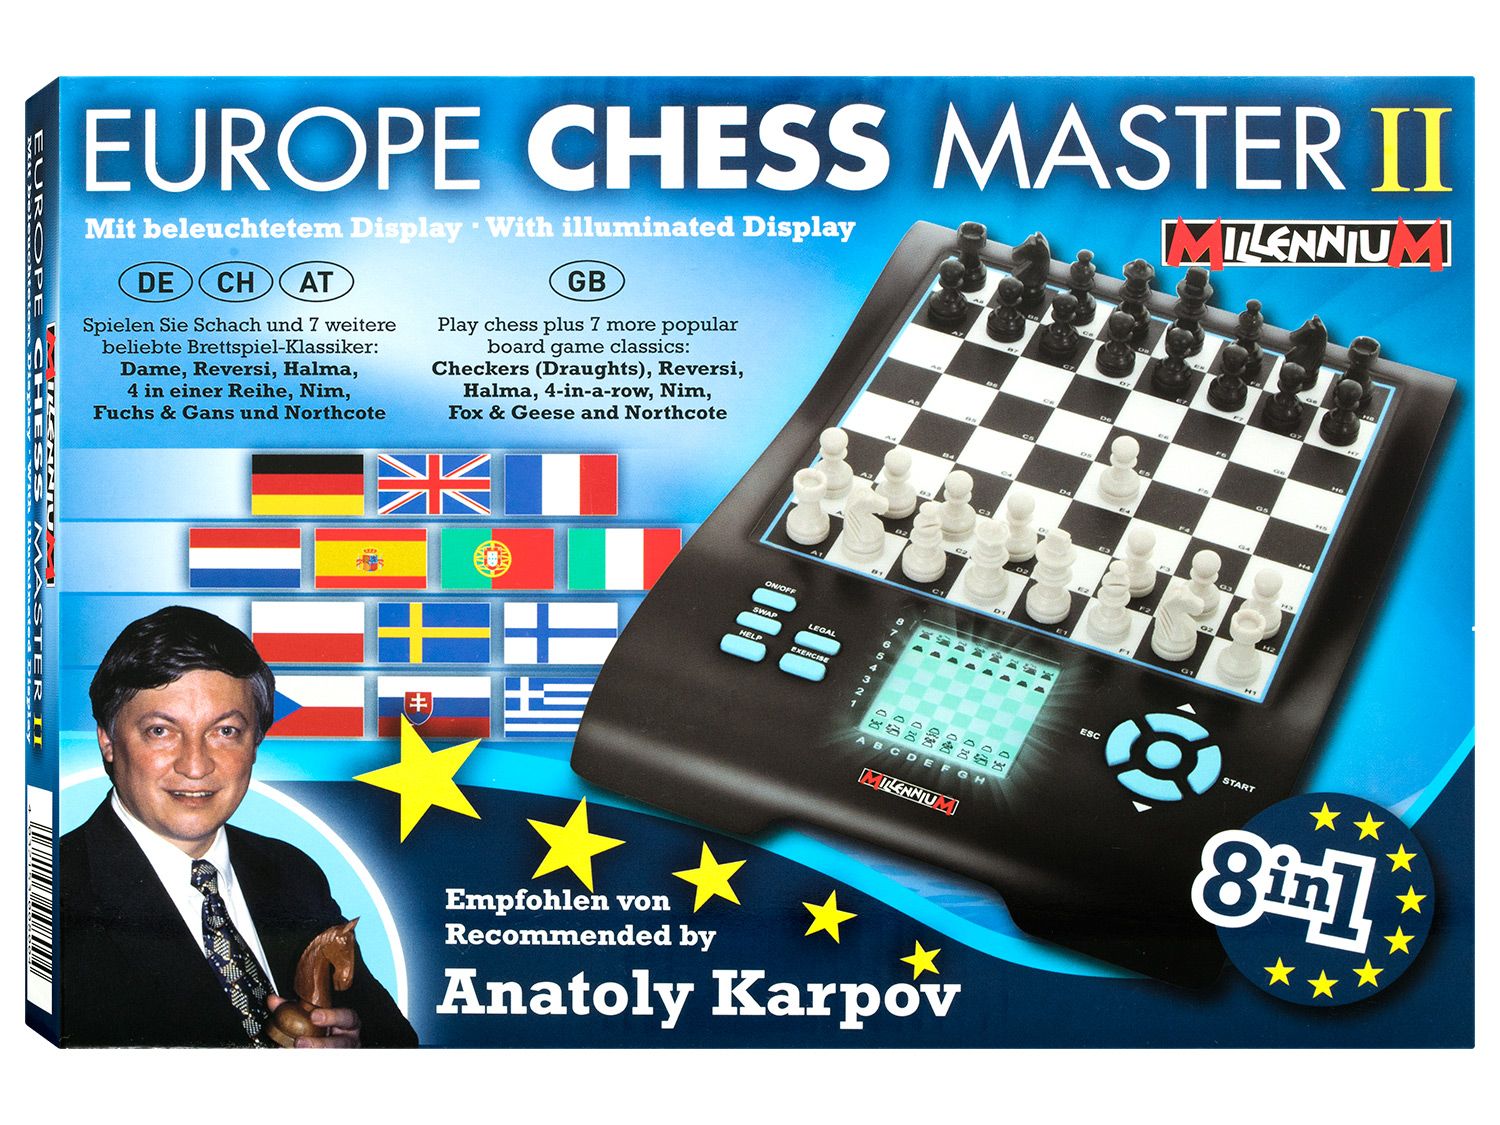 Millennium Europe Chess Master II Chess Computer